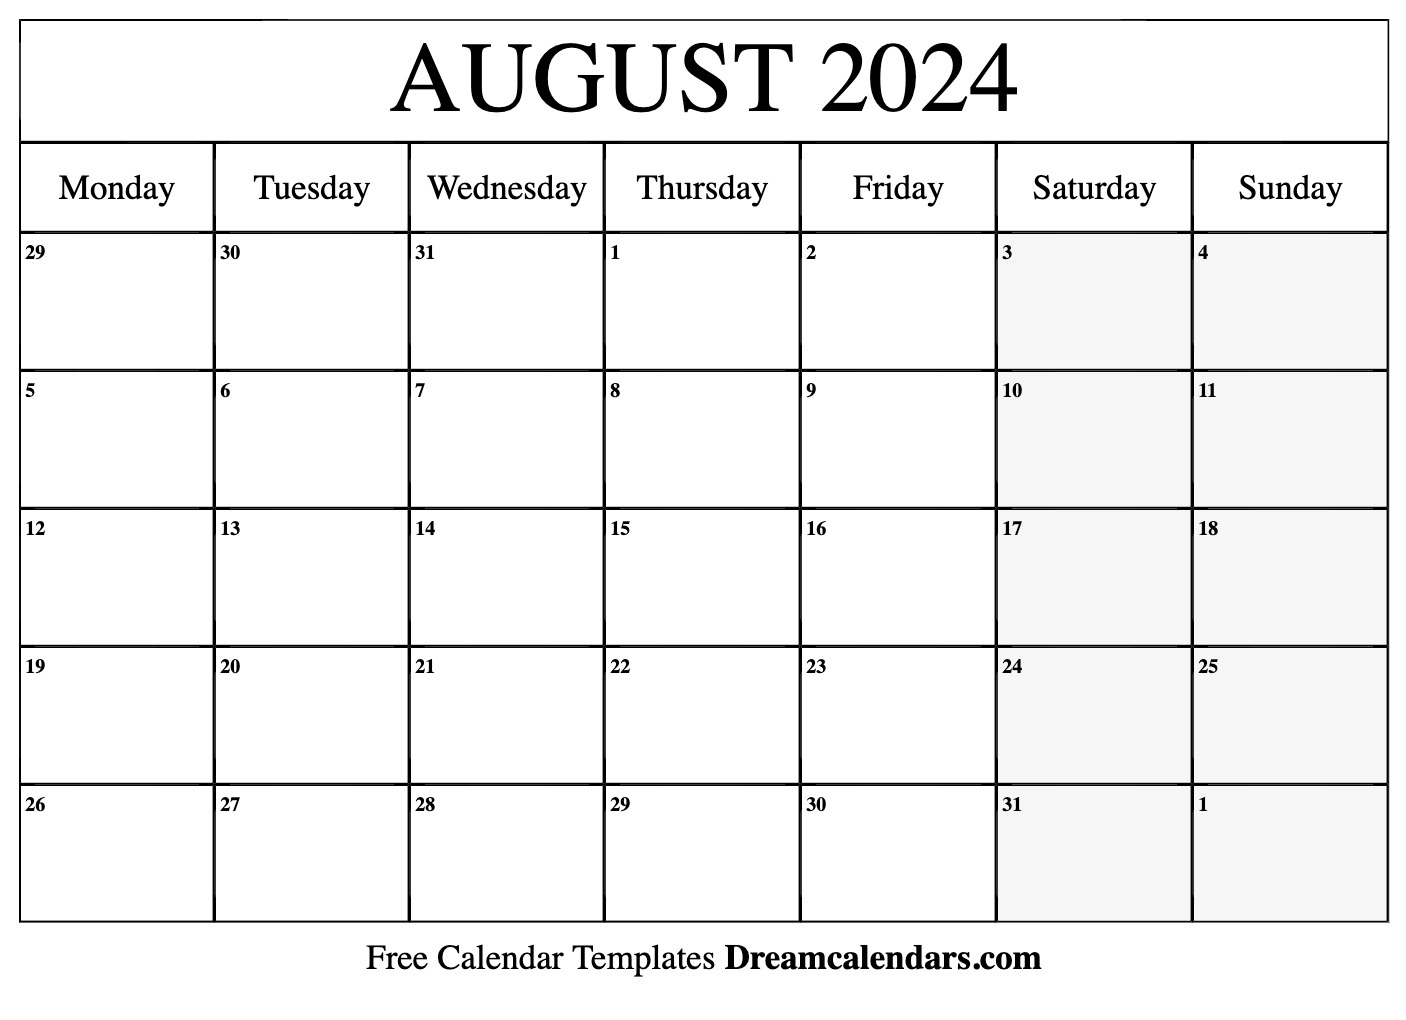 Free August 2024 Calendar Audra Candide - Free Printable August 2024 Calendar Template